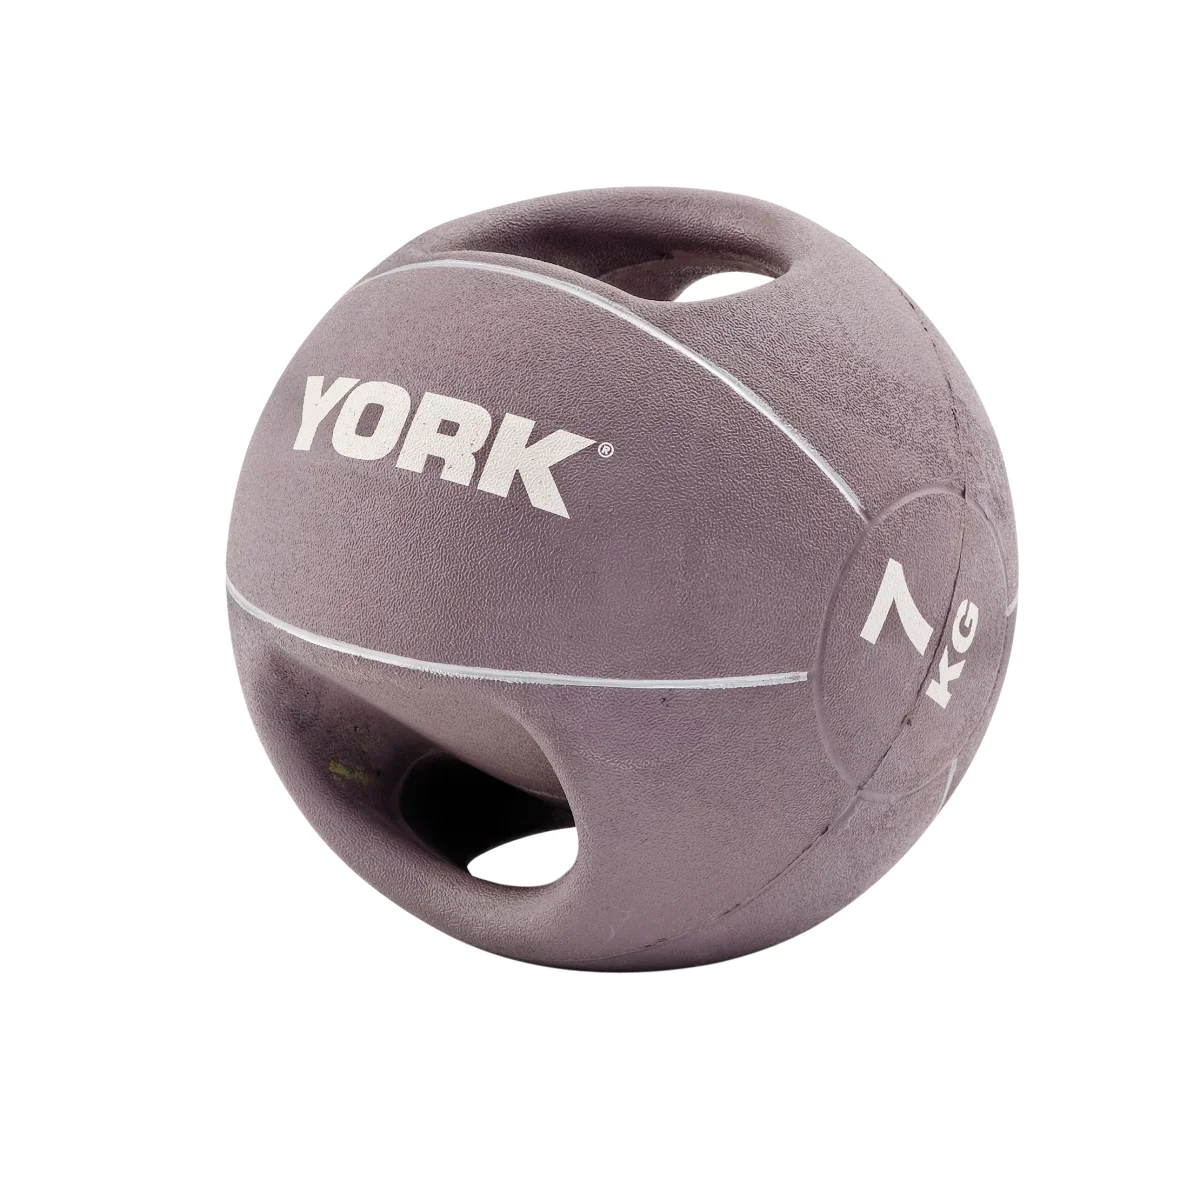 York Barbell Dual Grip Medicine Ball 7kg